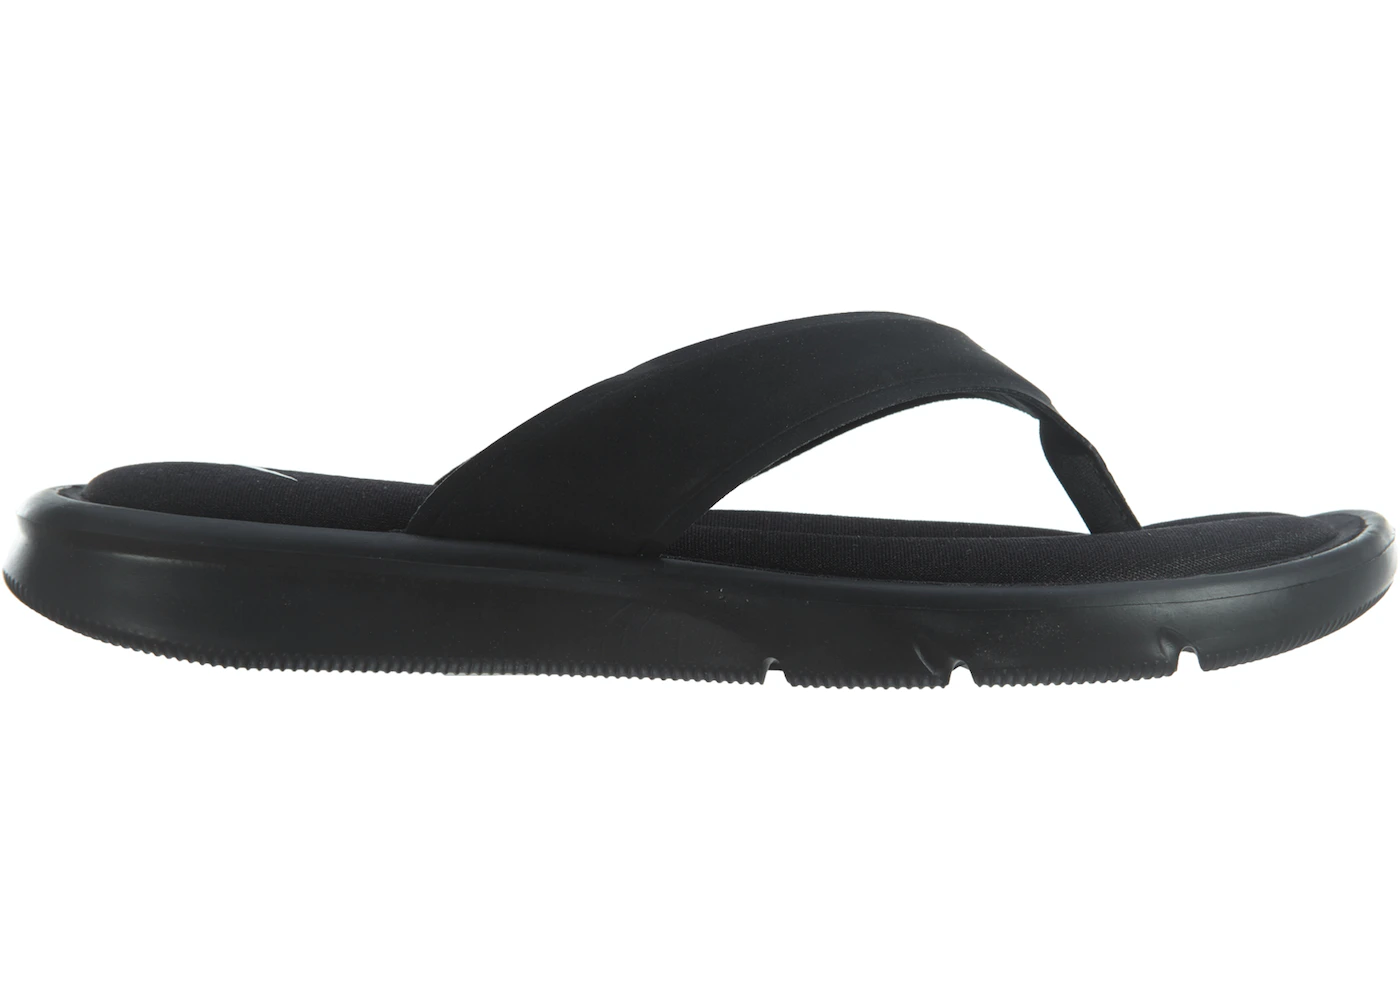 Nike Ultra Comfort Thong Black White Black (Women's) - 882697-001 - US